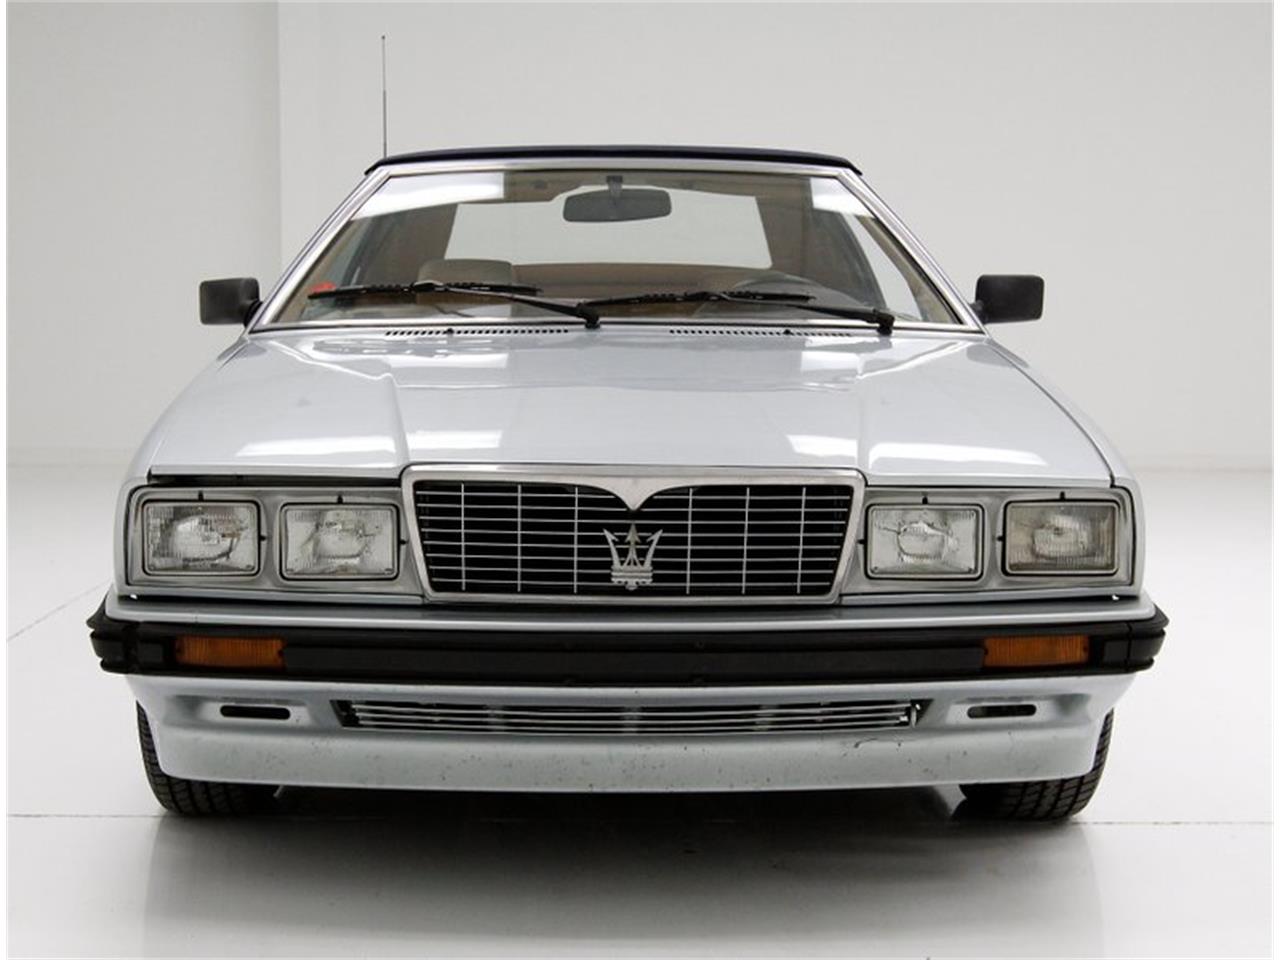 1986 Maserati Biturbo for sale in Morgantown, PA ...